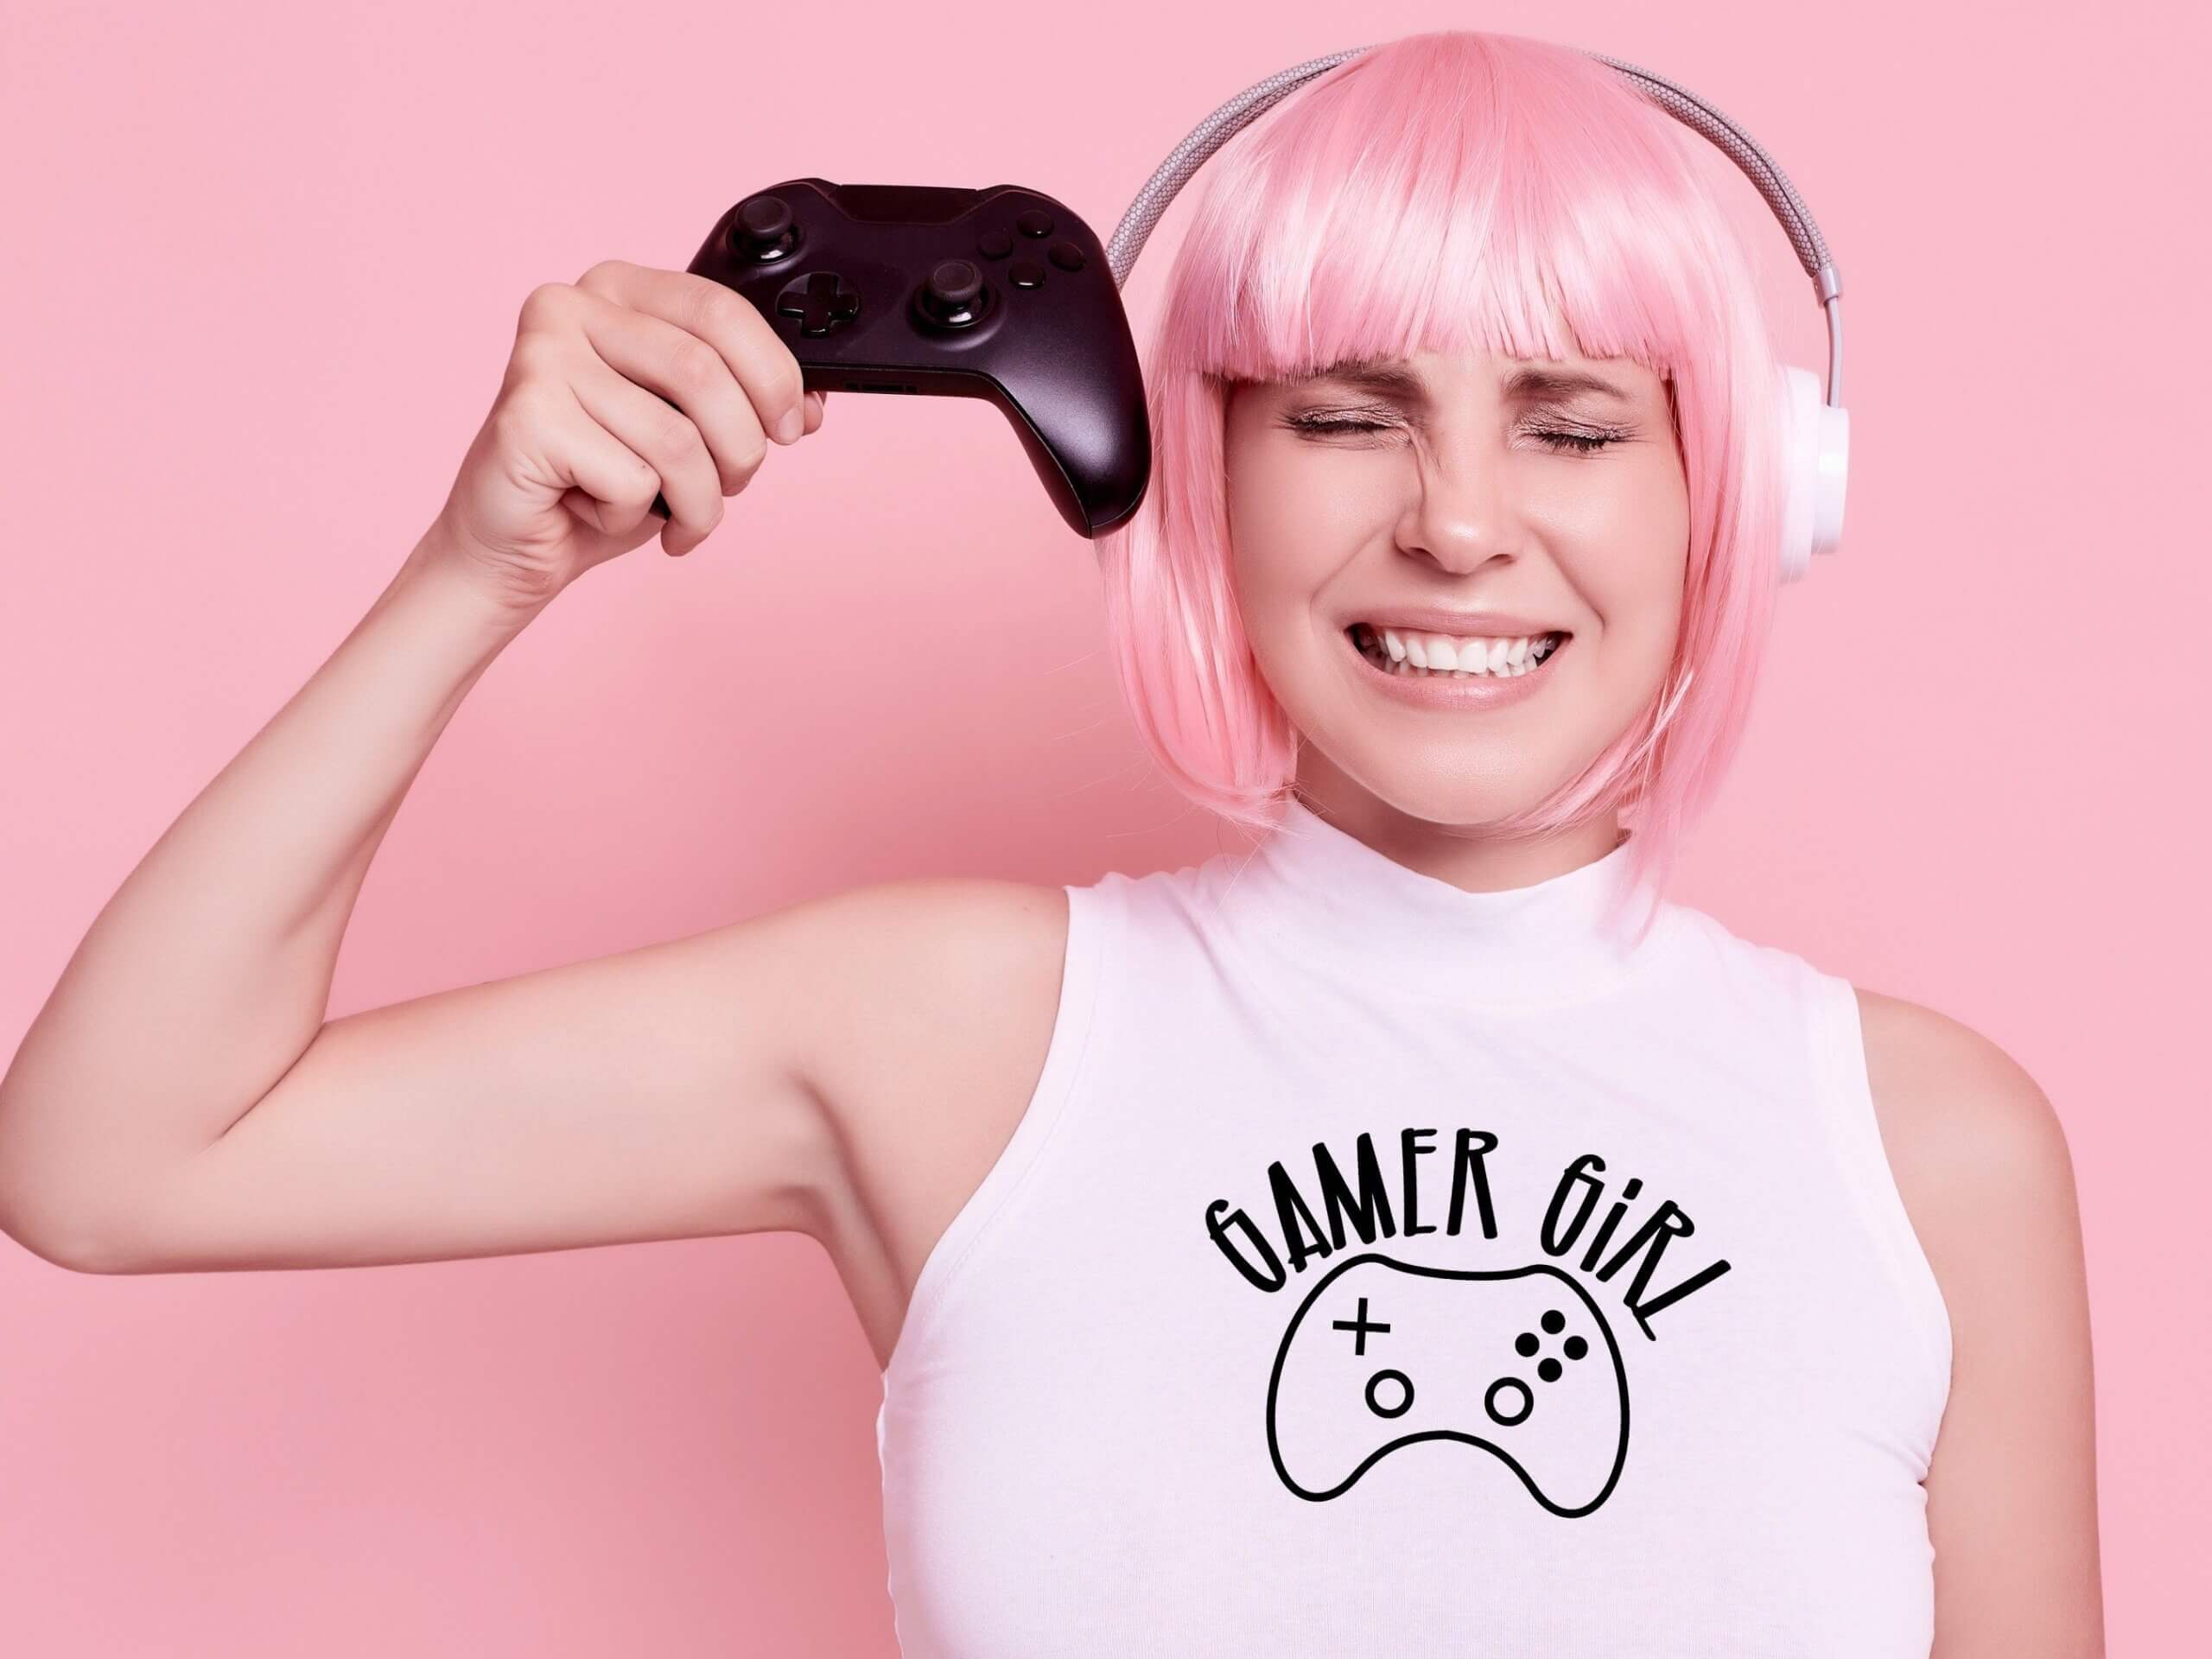 Top 15 Best Onlyfans Gamer Girls Accounts fanscribers